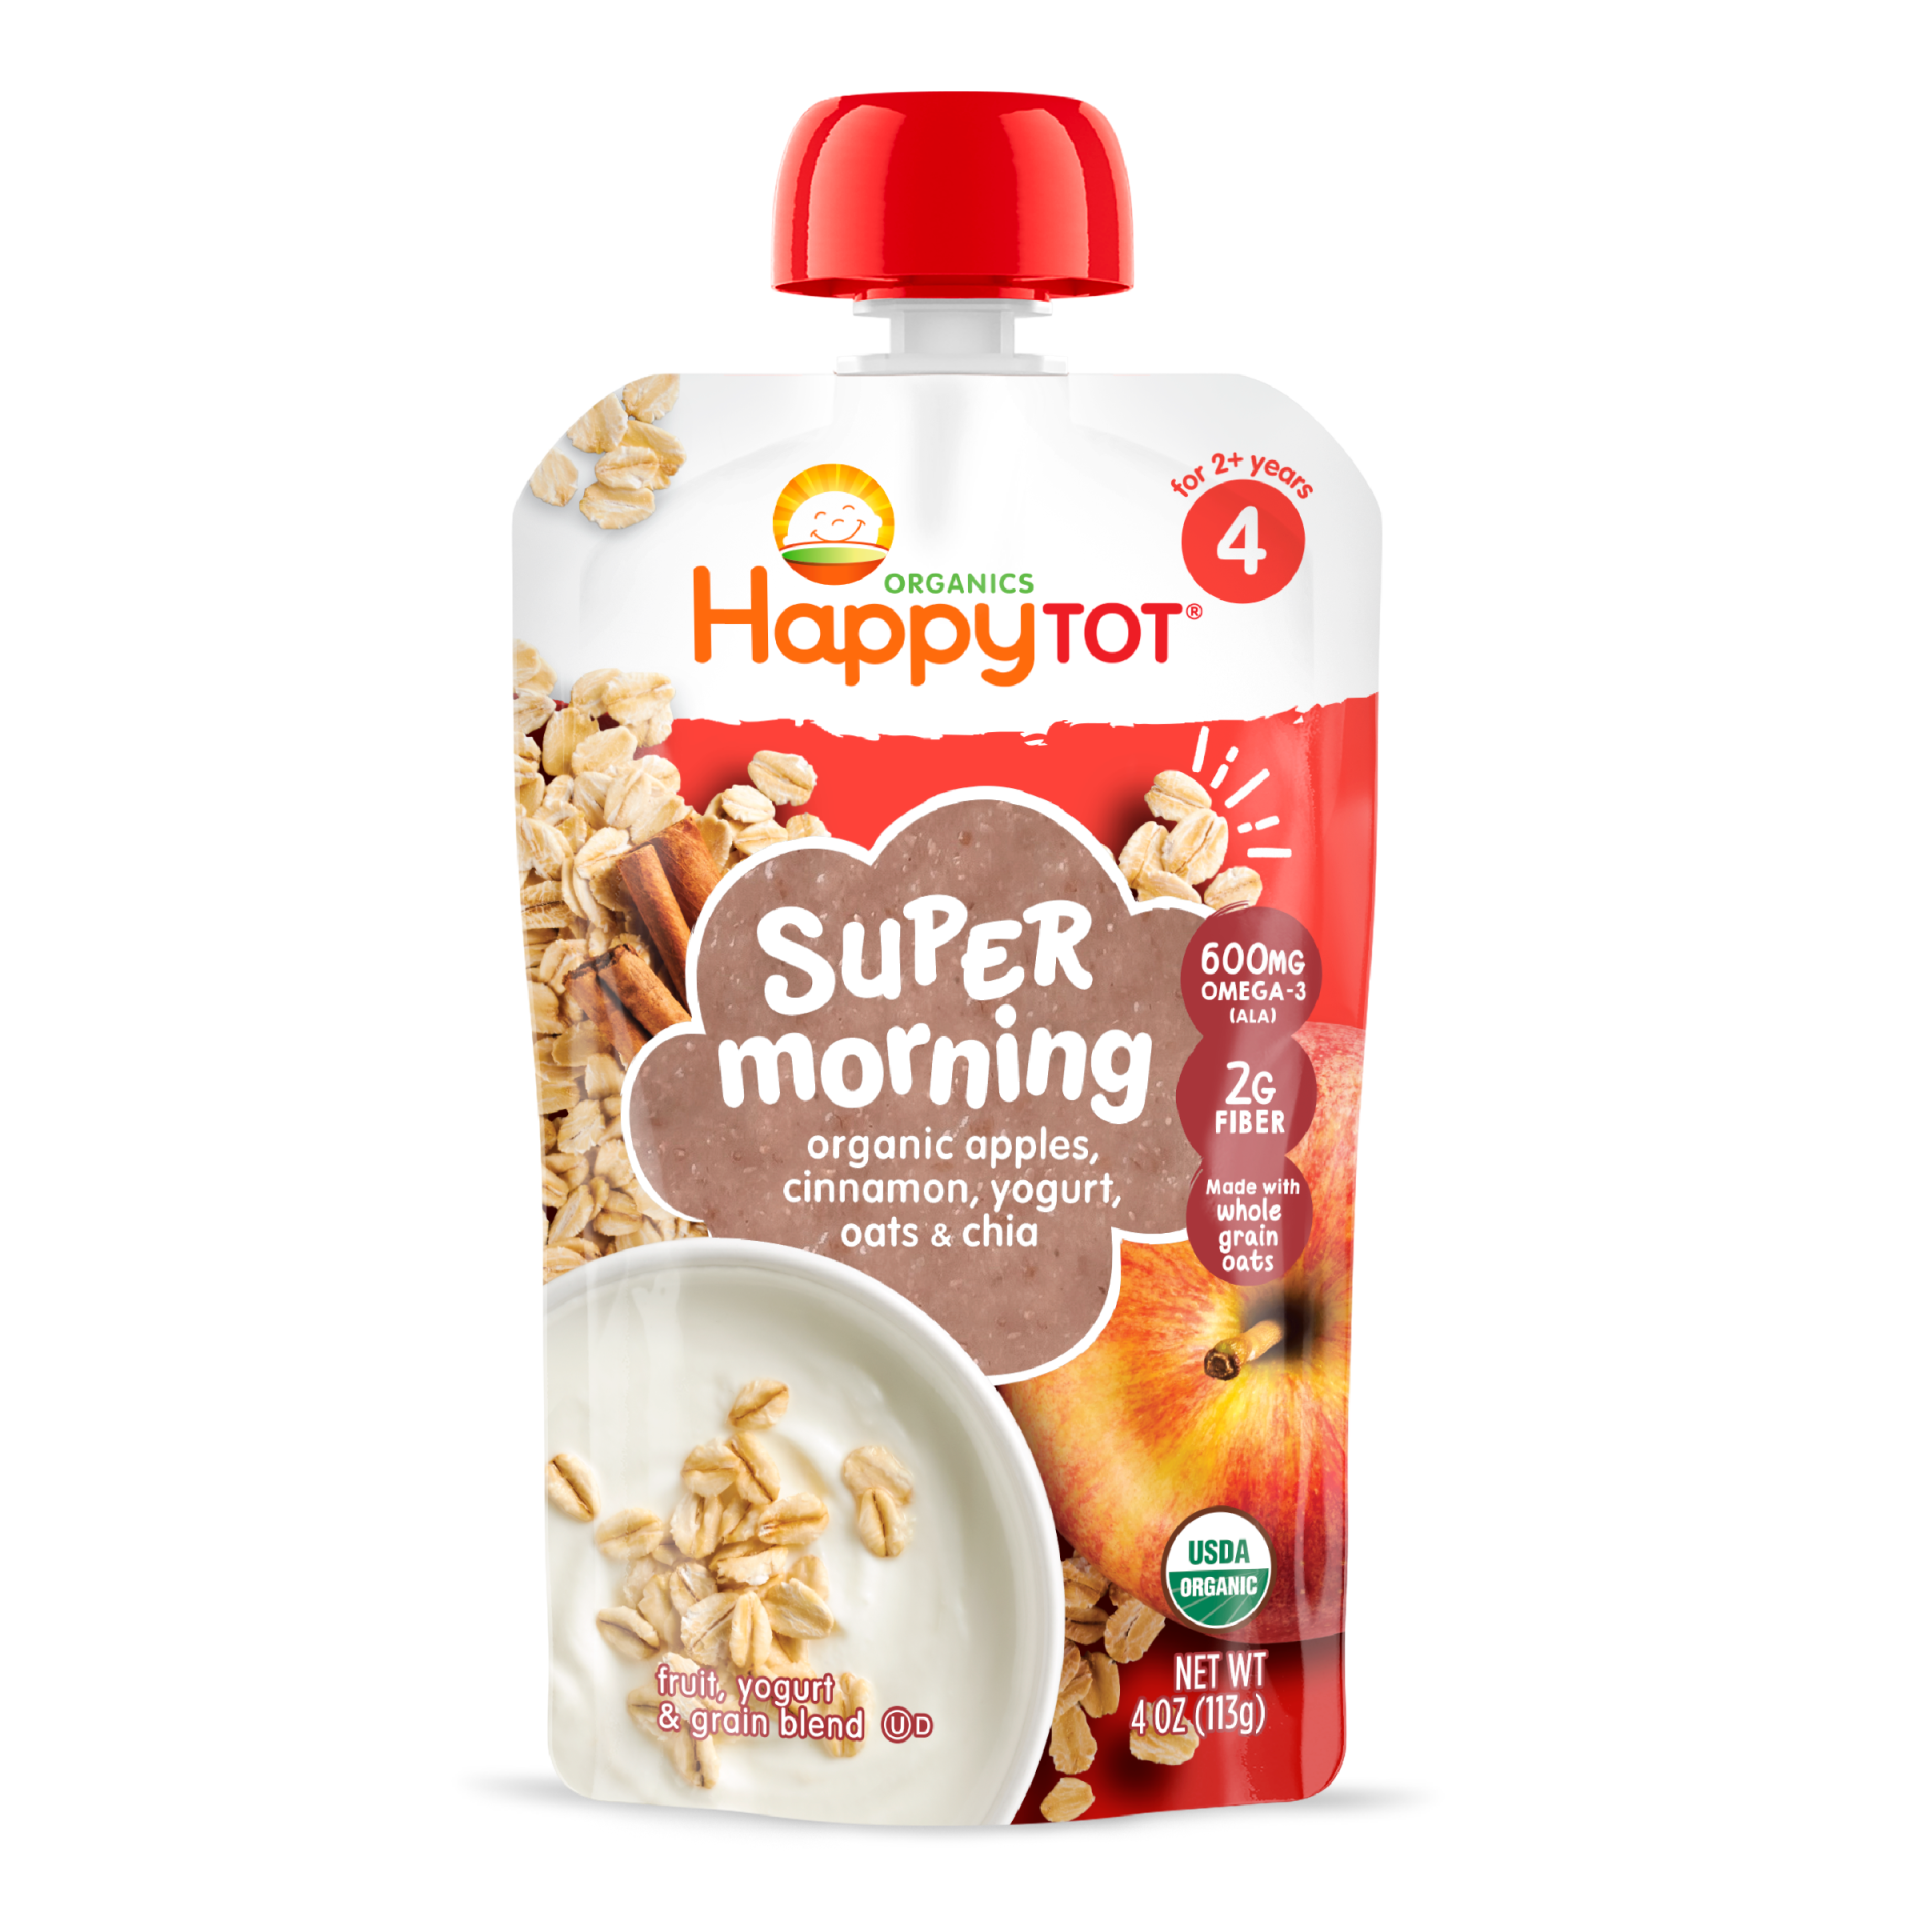 Happy Tot S4 - Super Morning Organic Apples Cinnamon Yogurt & Oats 4Oz pouch 16 units per case 4.0 oz